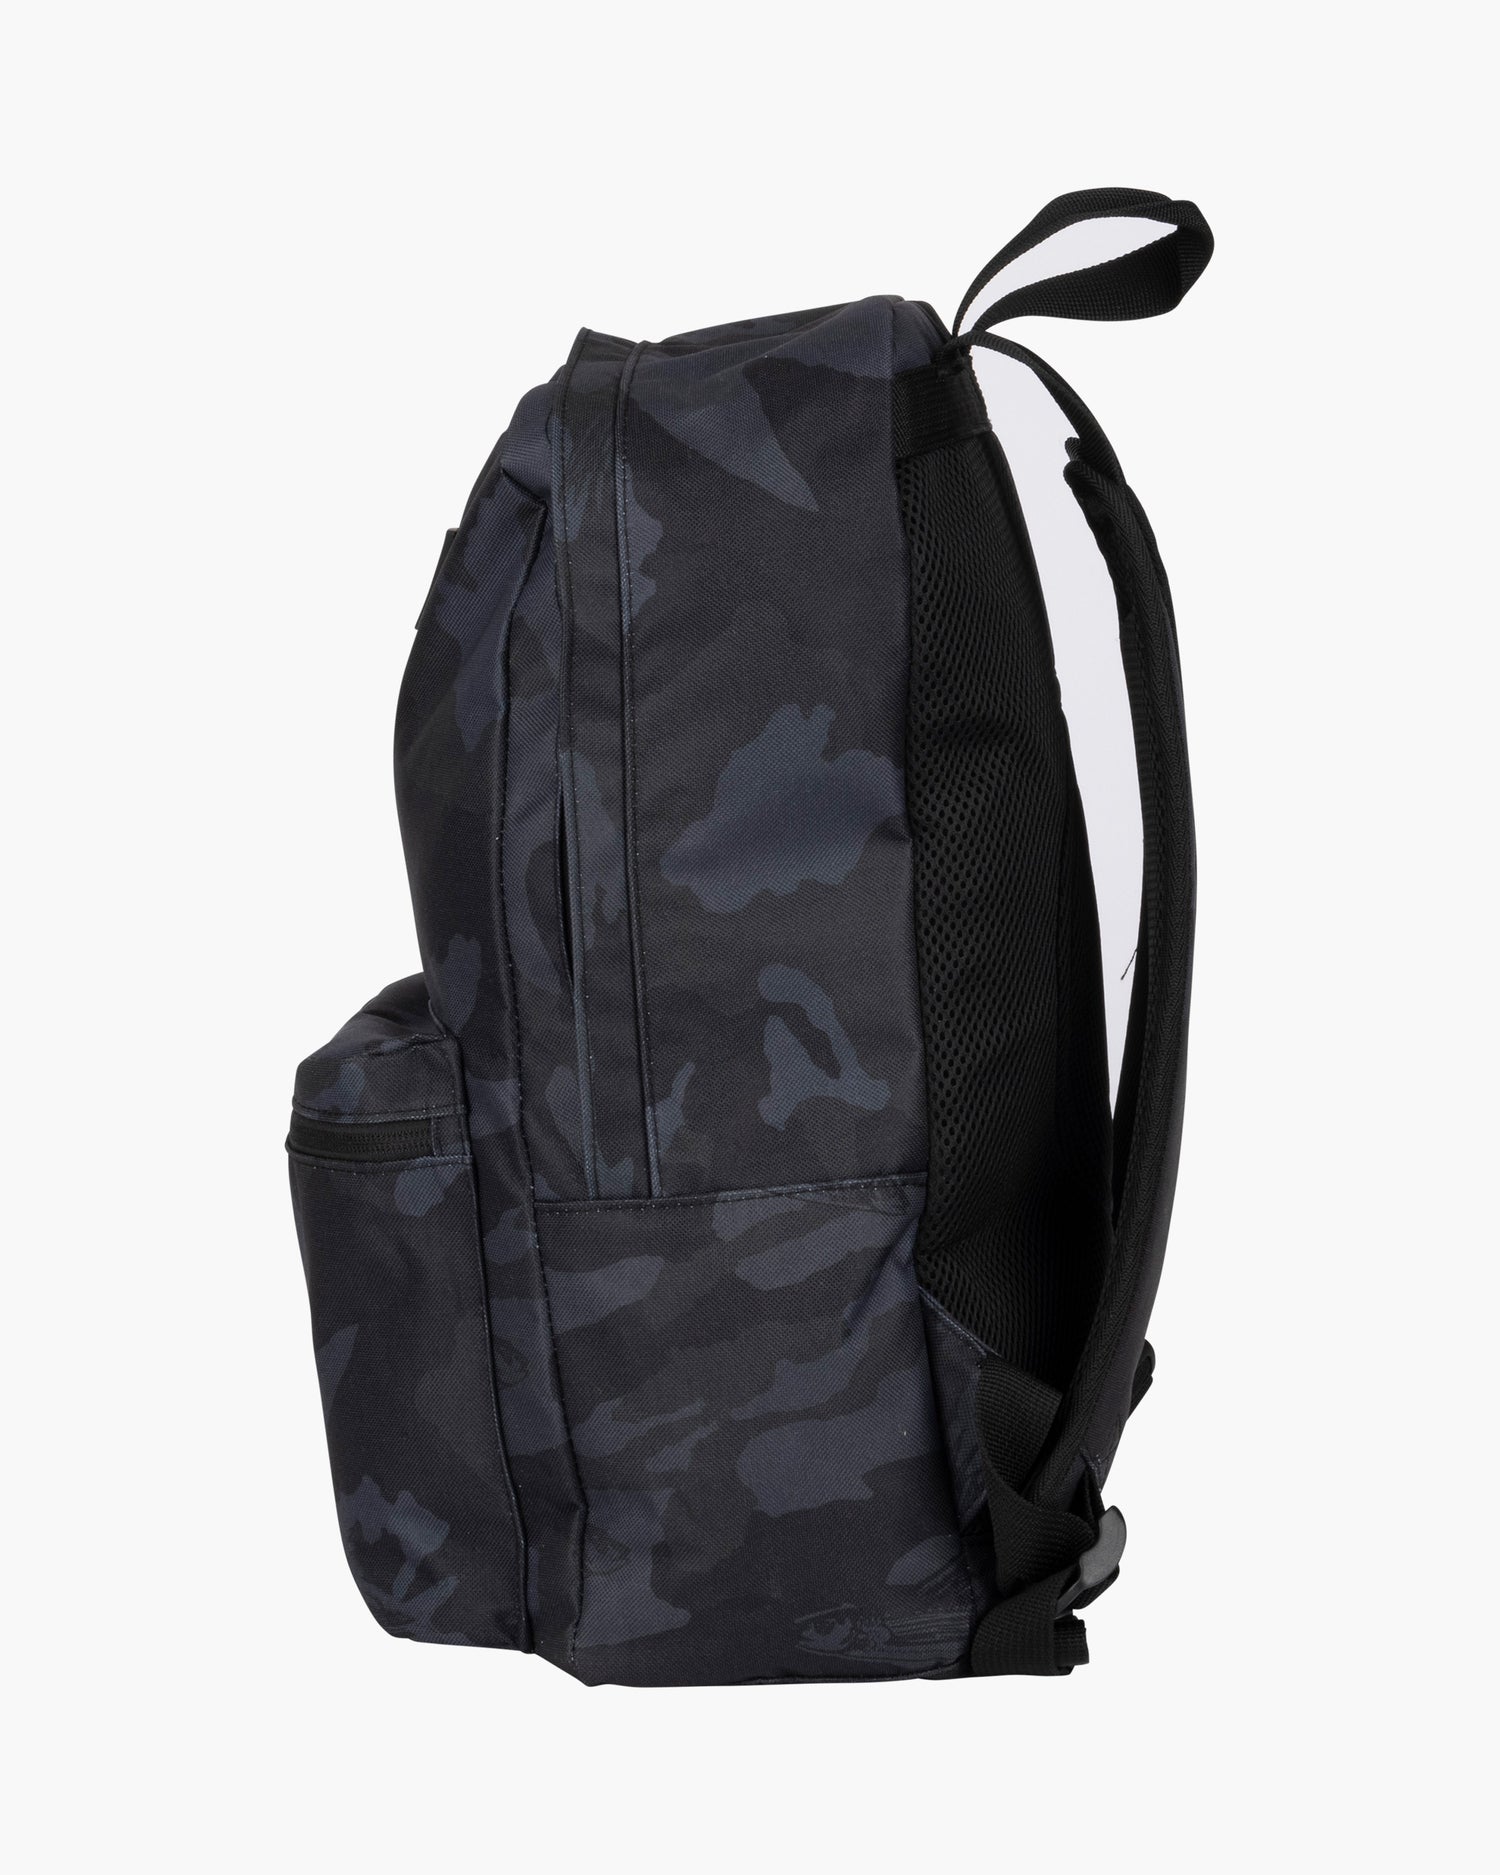 profile of Brig Black Camo Backpack